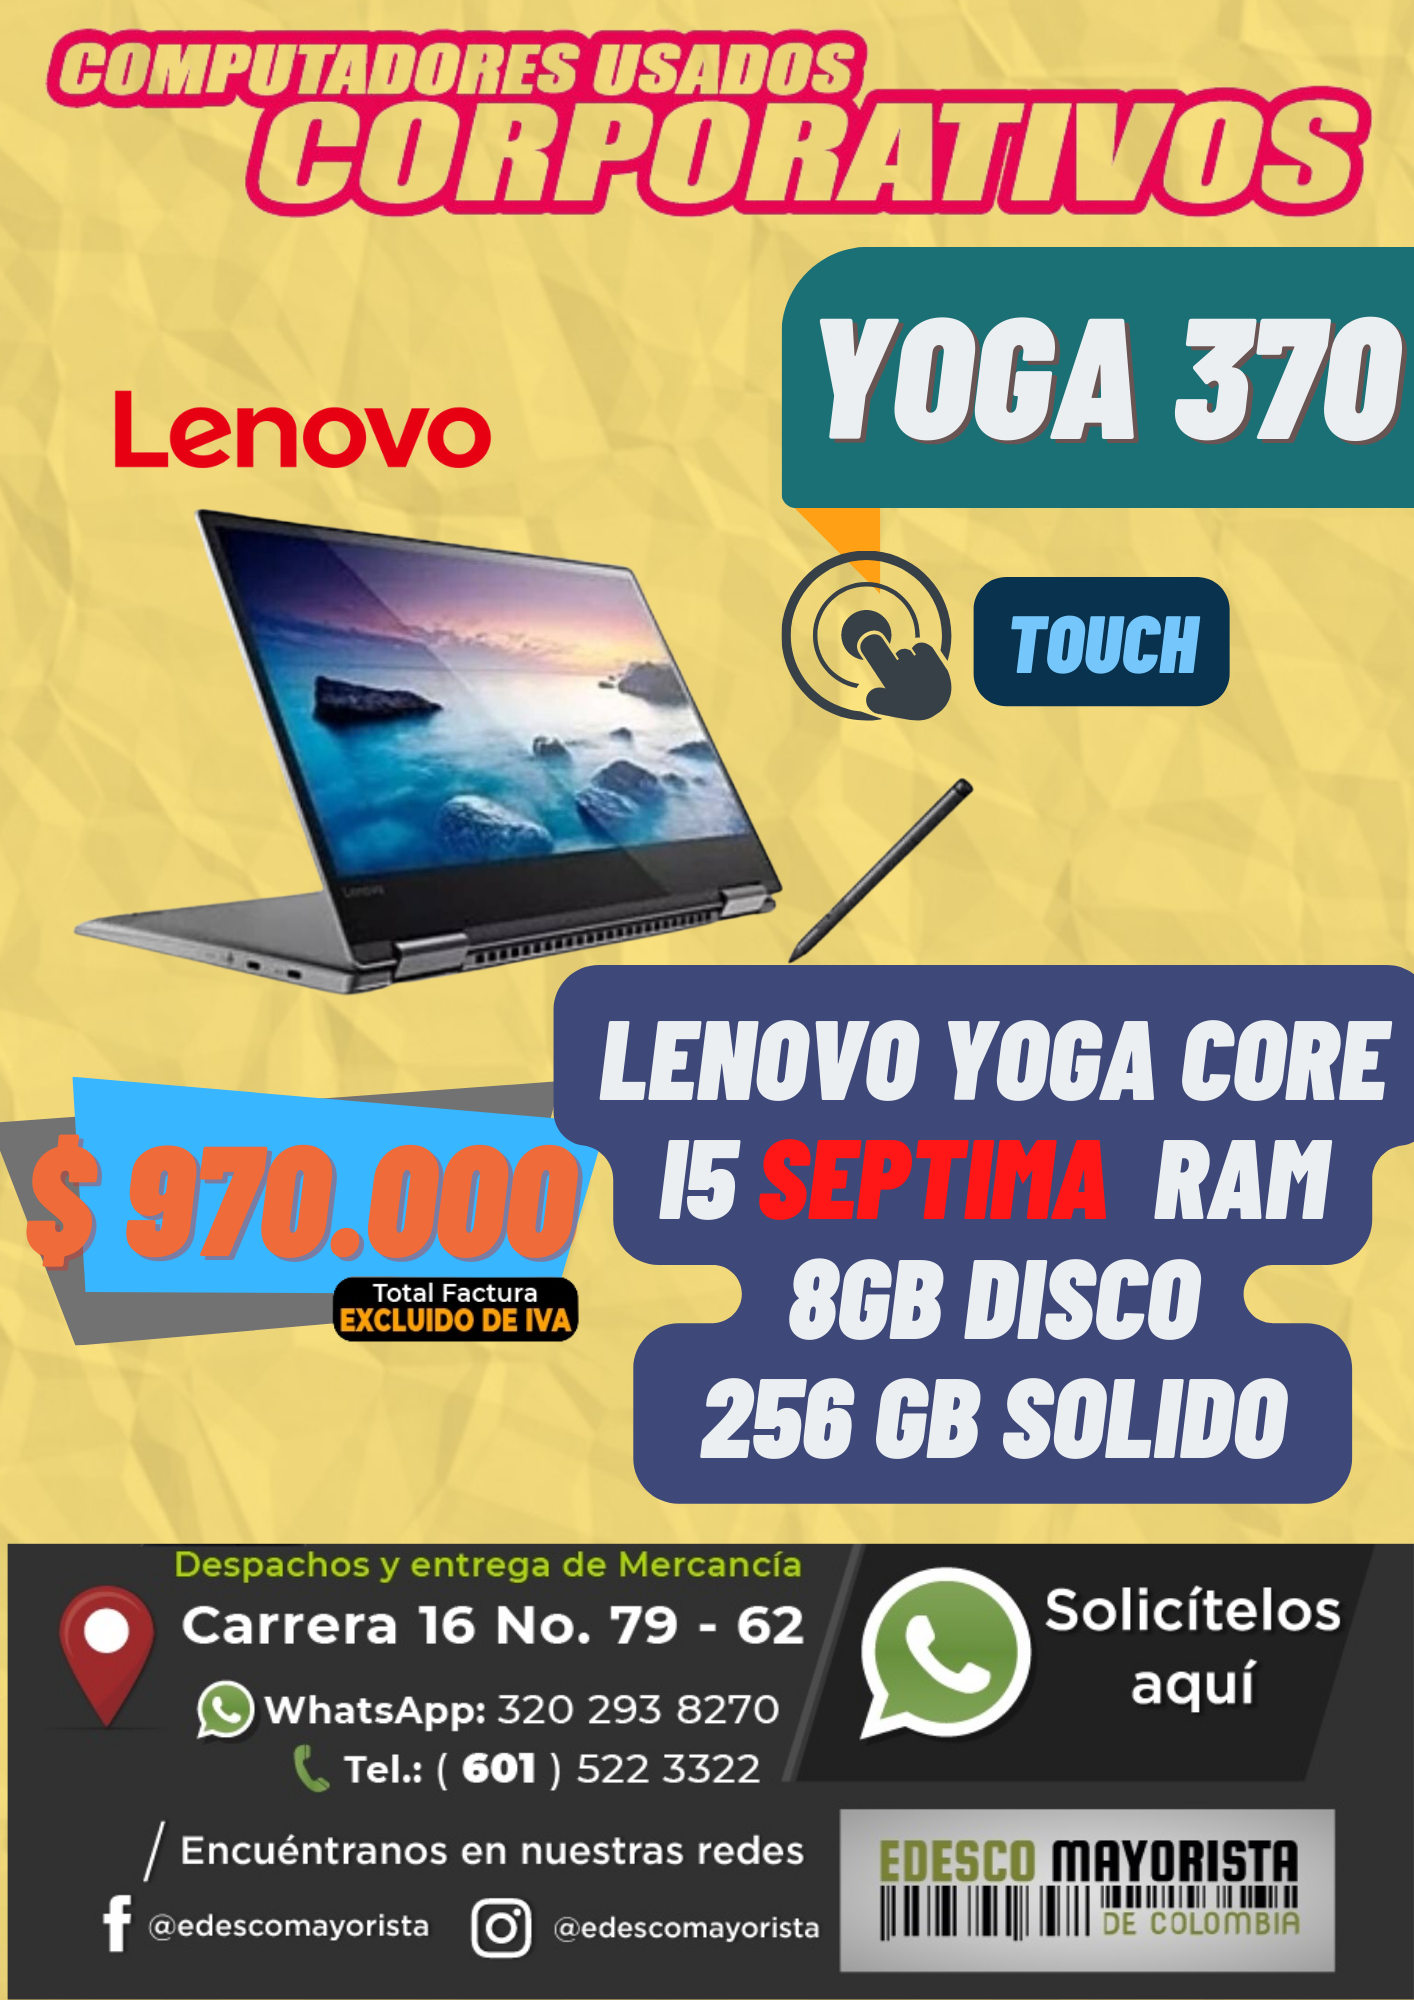 Lenovo Yoga x370